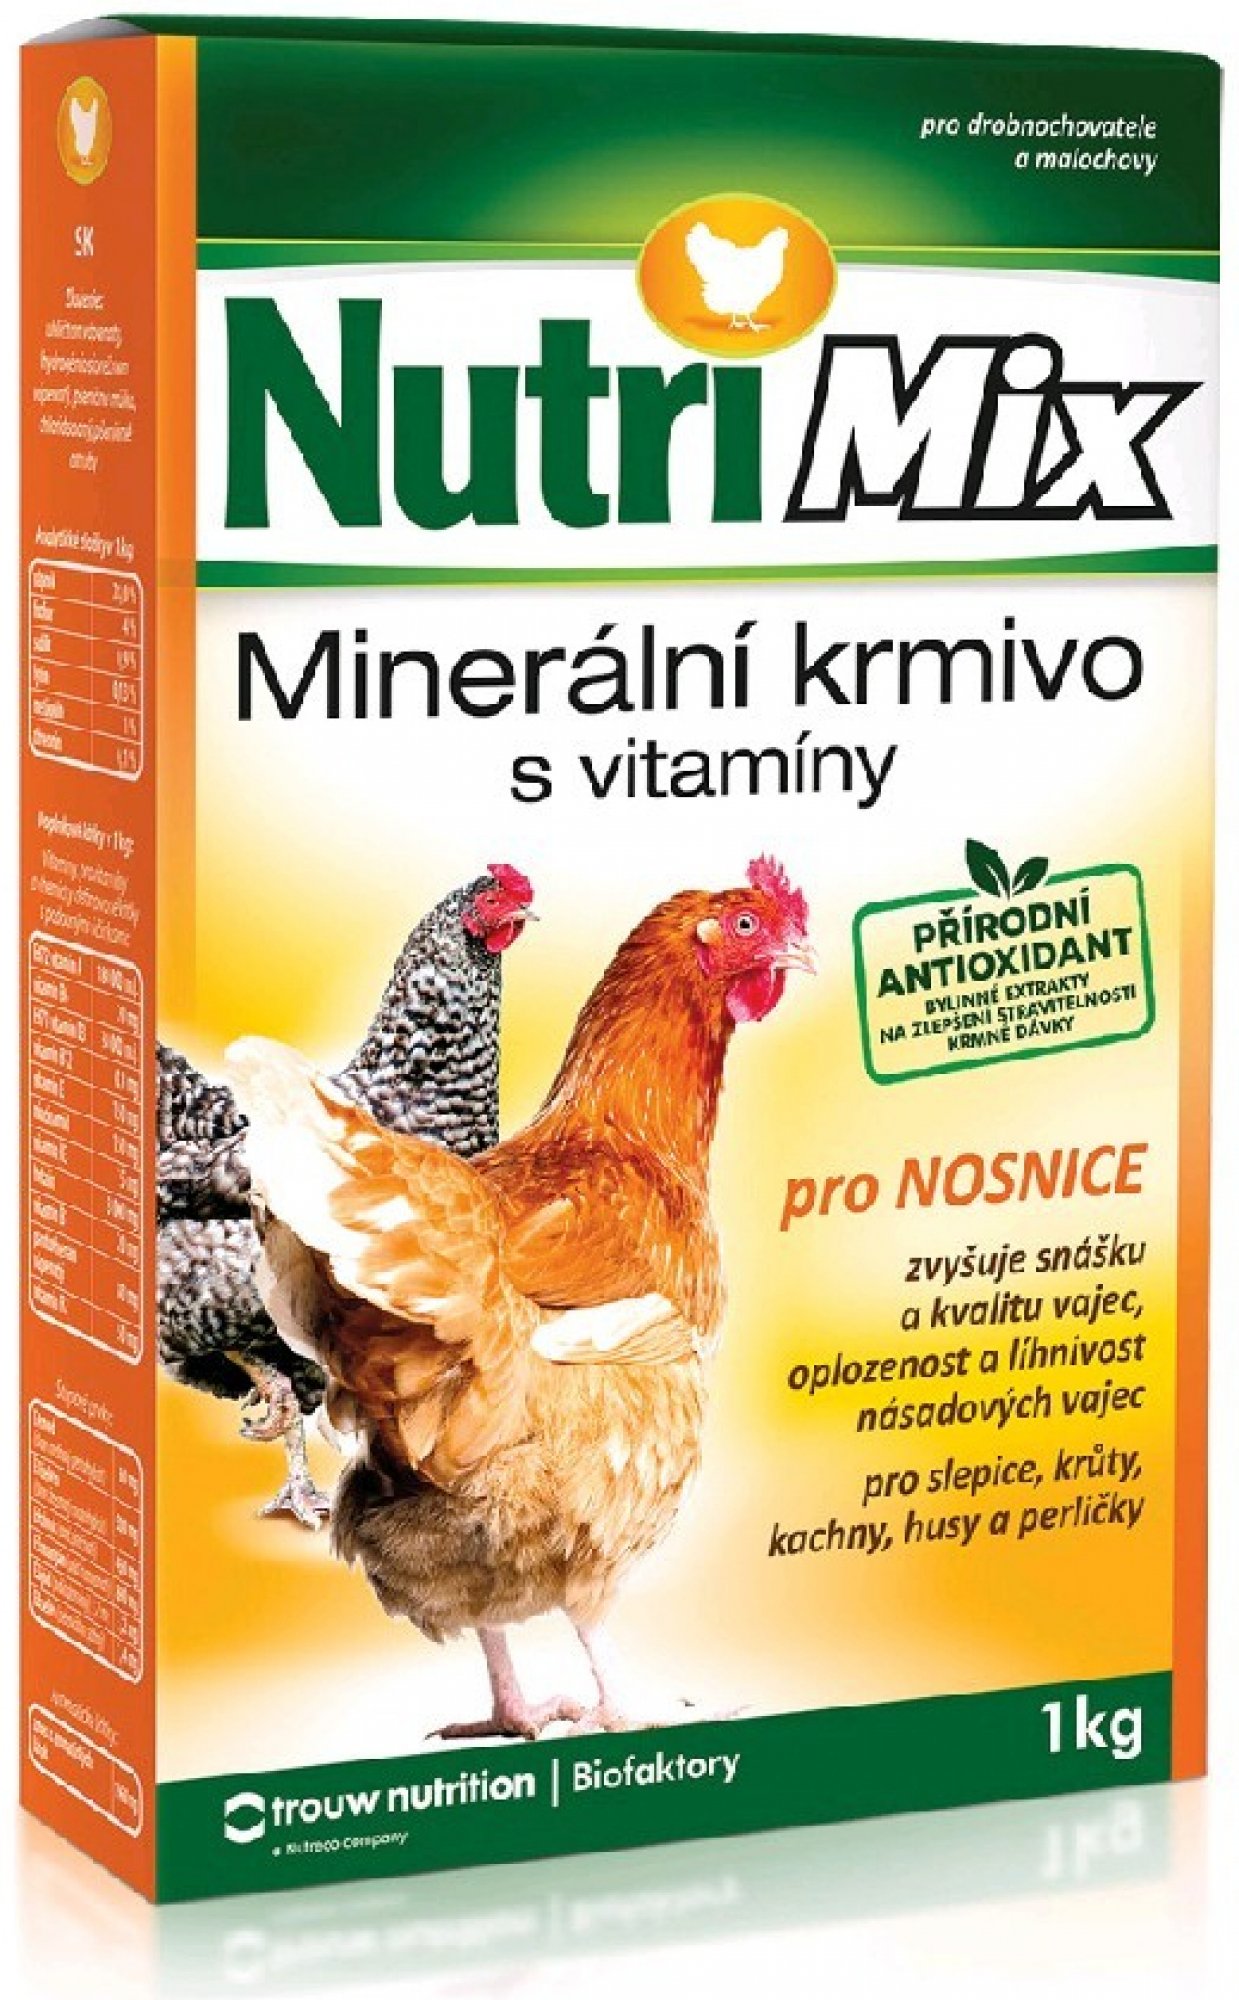 Nutrimix pro nosnice 1kg Biofaktory